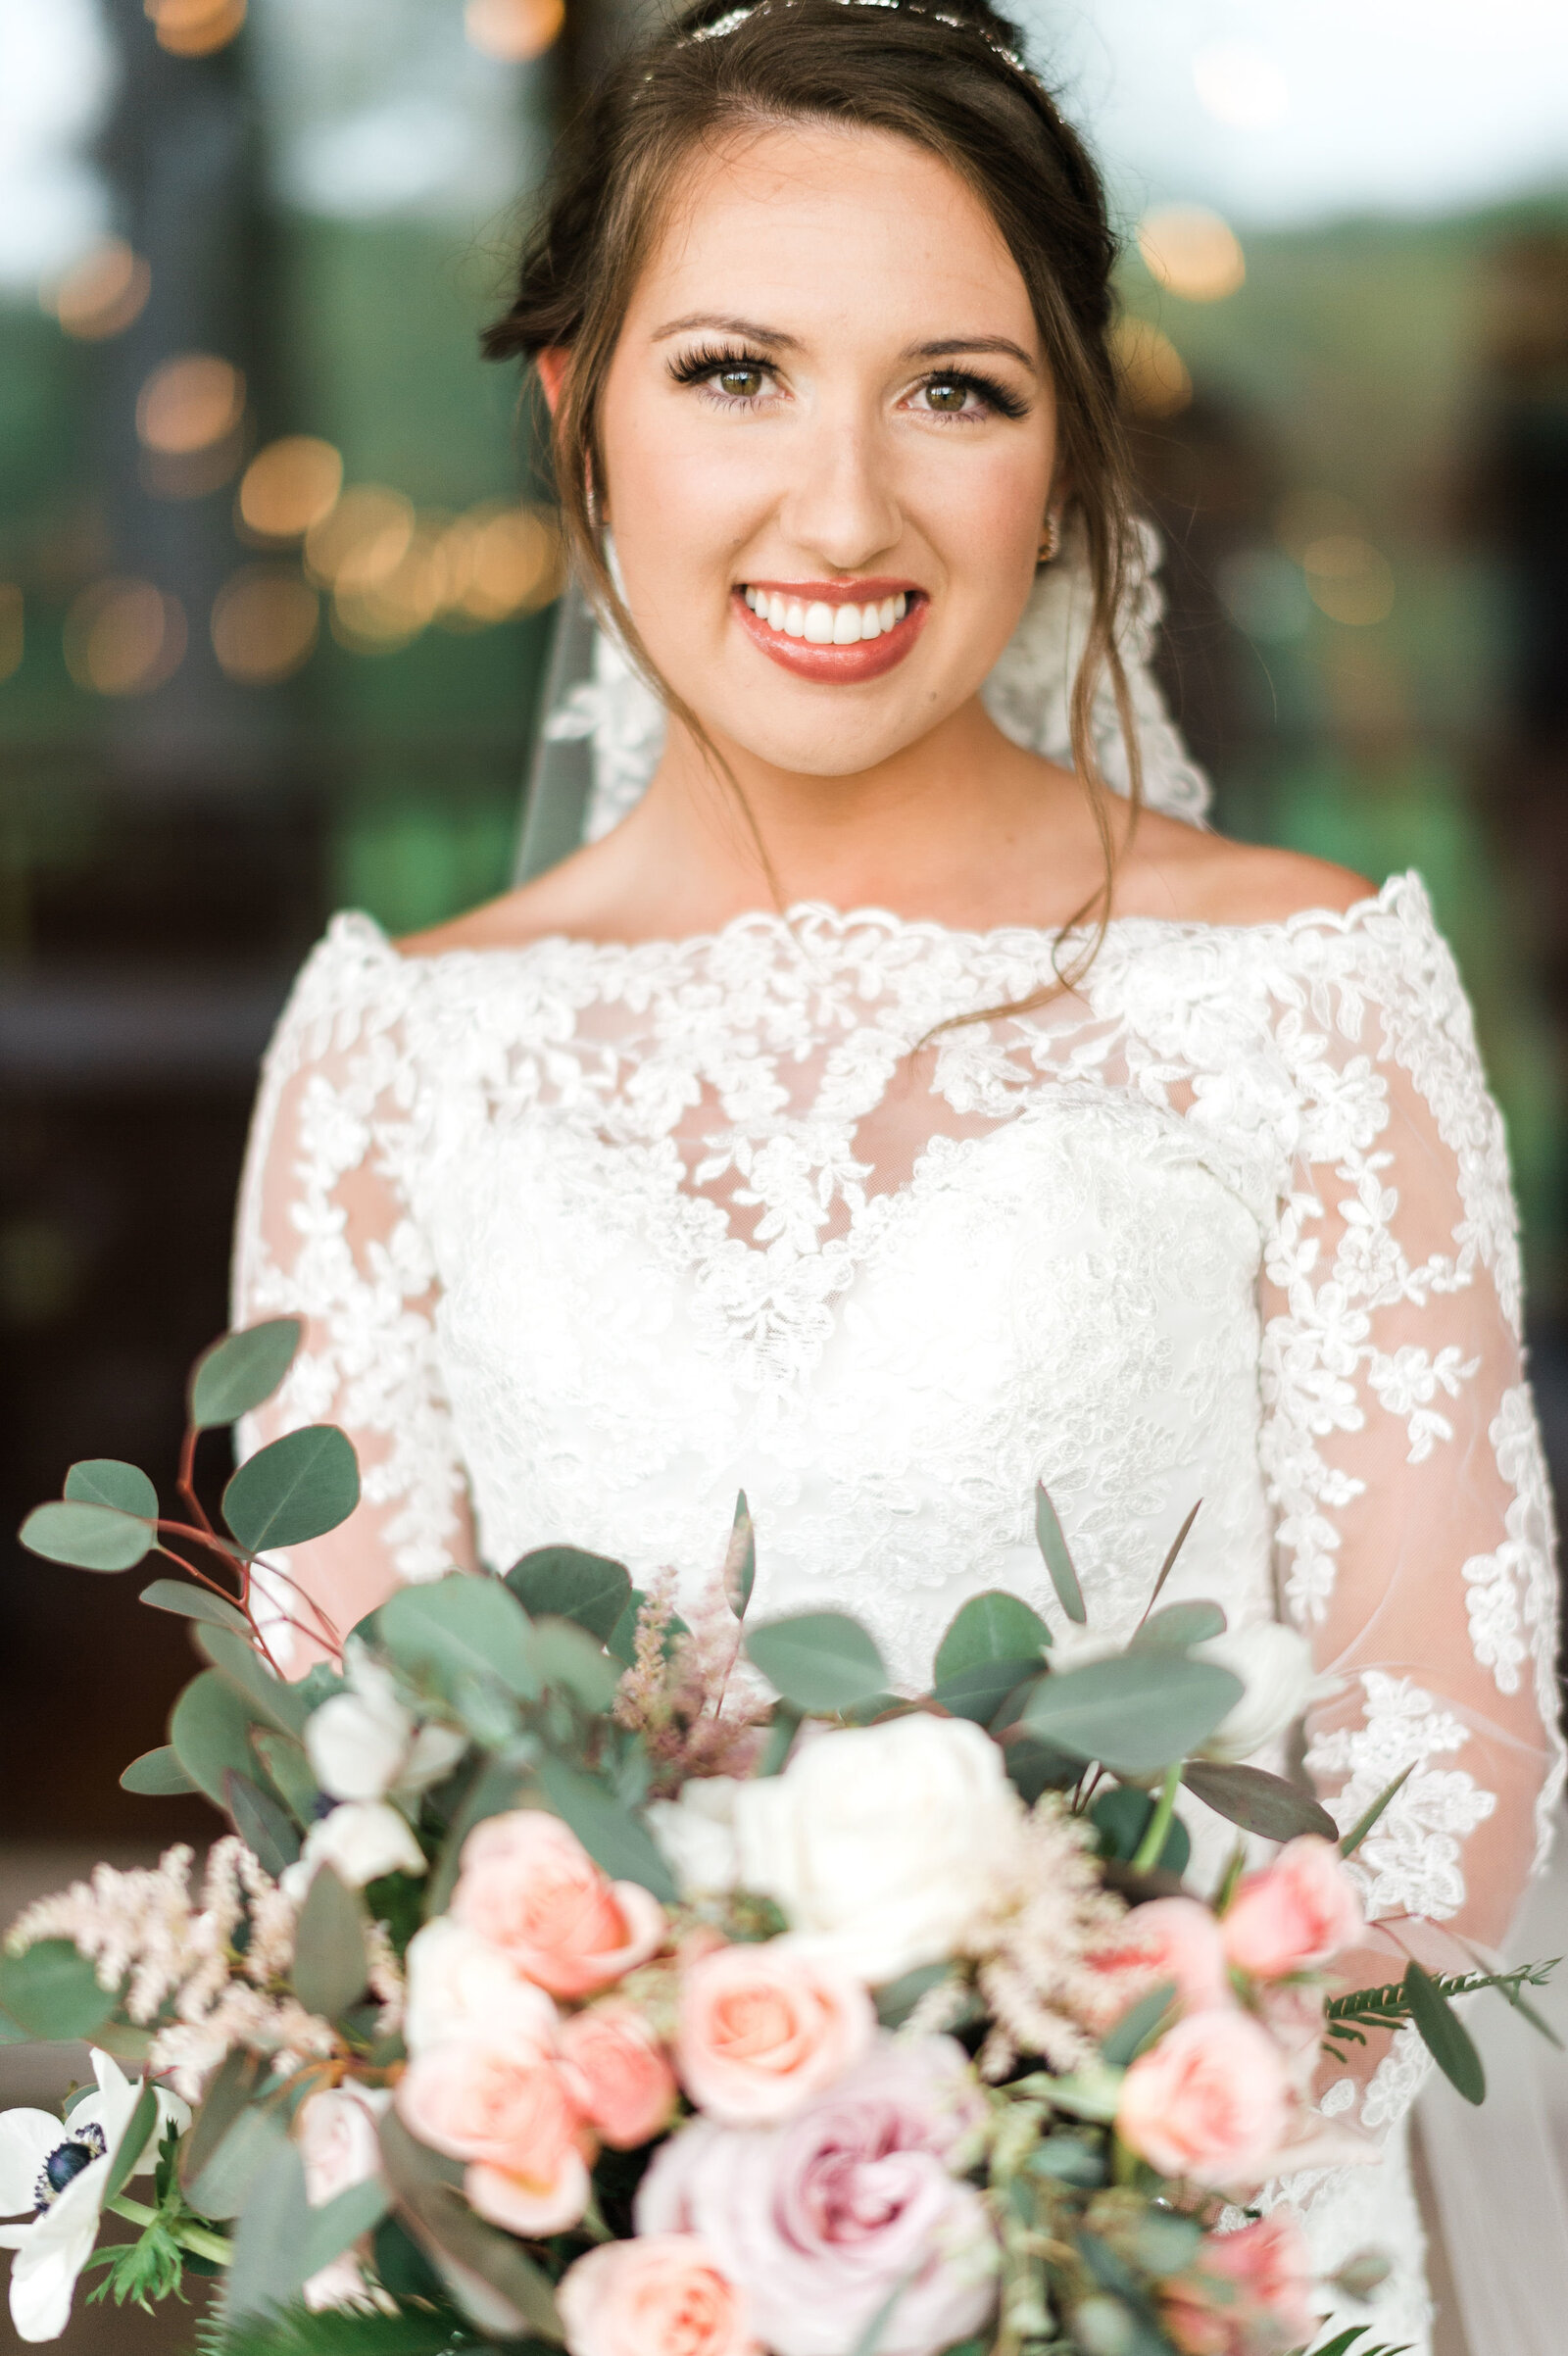 Wedding photographer near meensboro wedding photographer - Karen salinas photography